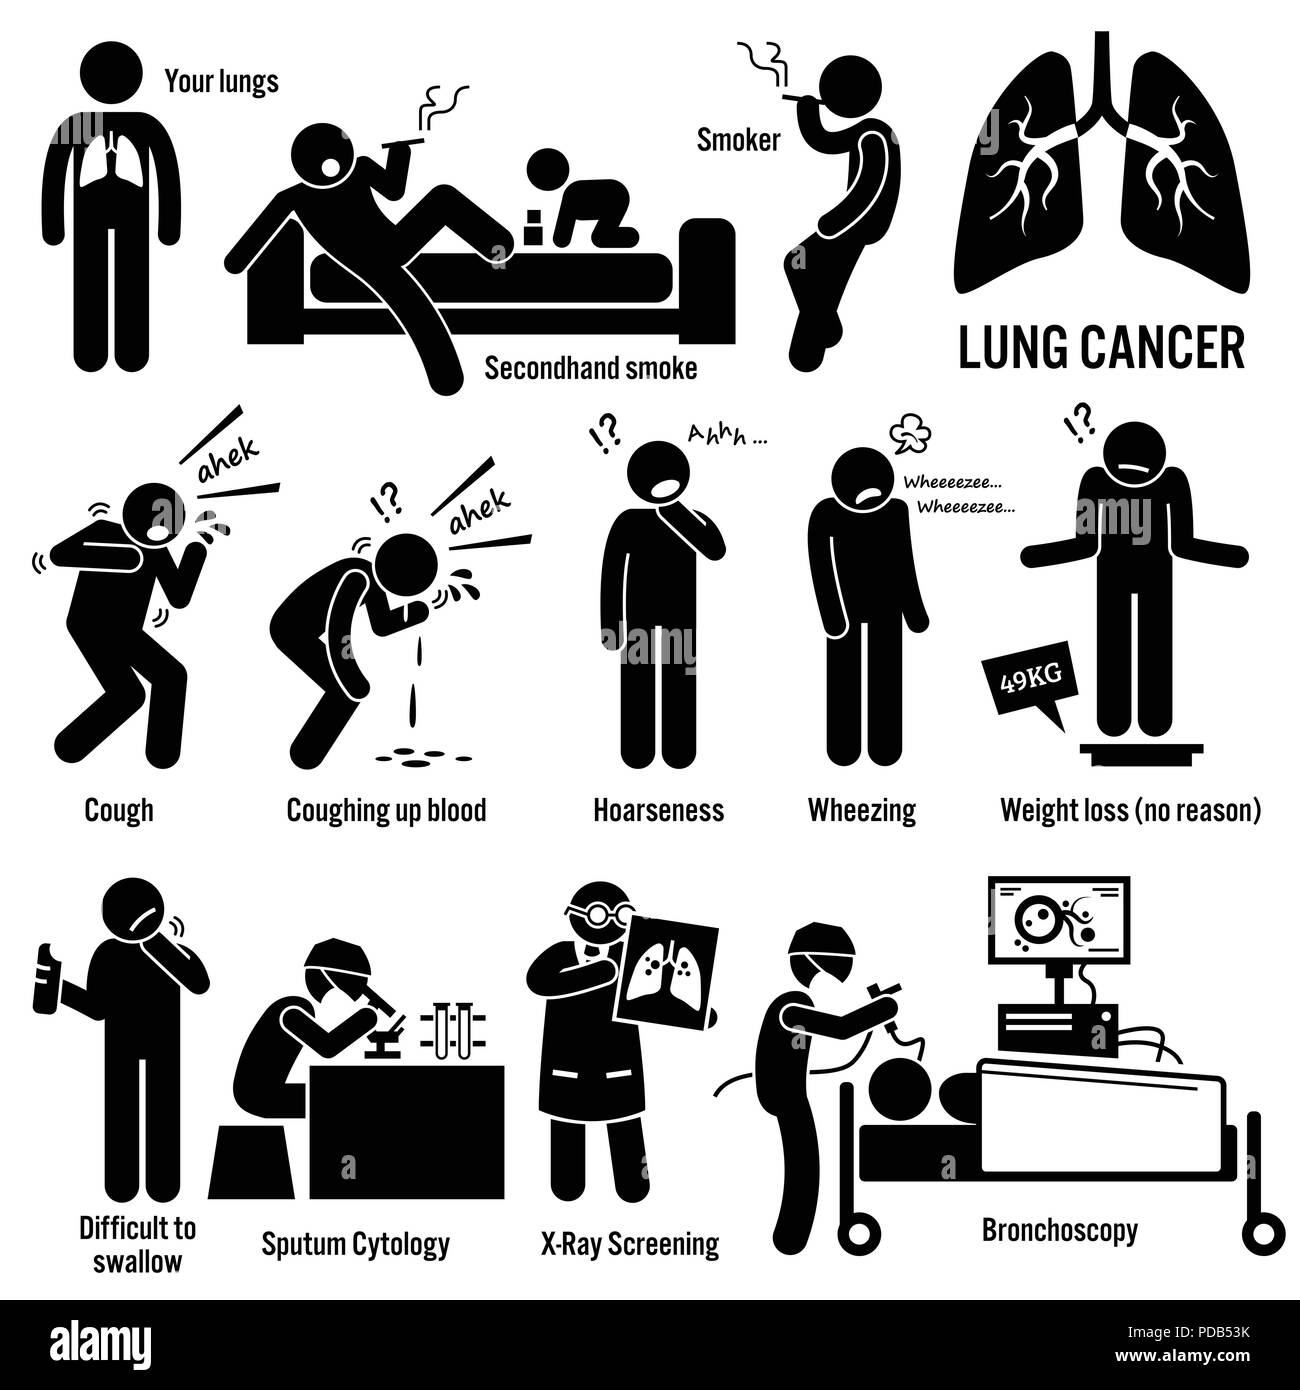 Lung Cancer Symptoms Causes Risk Factors Diagnosis Stick Figure Pictogram Icons Stock Vector